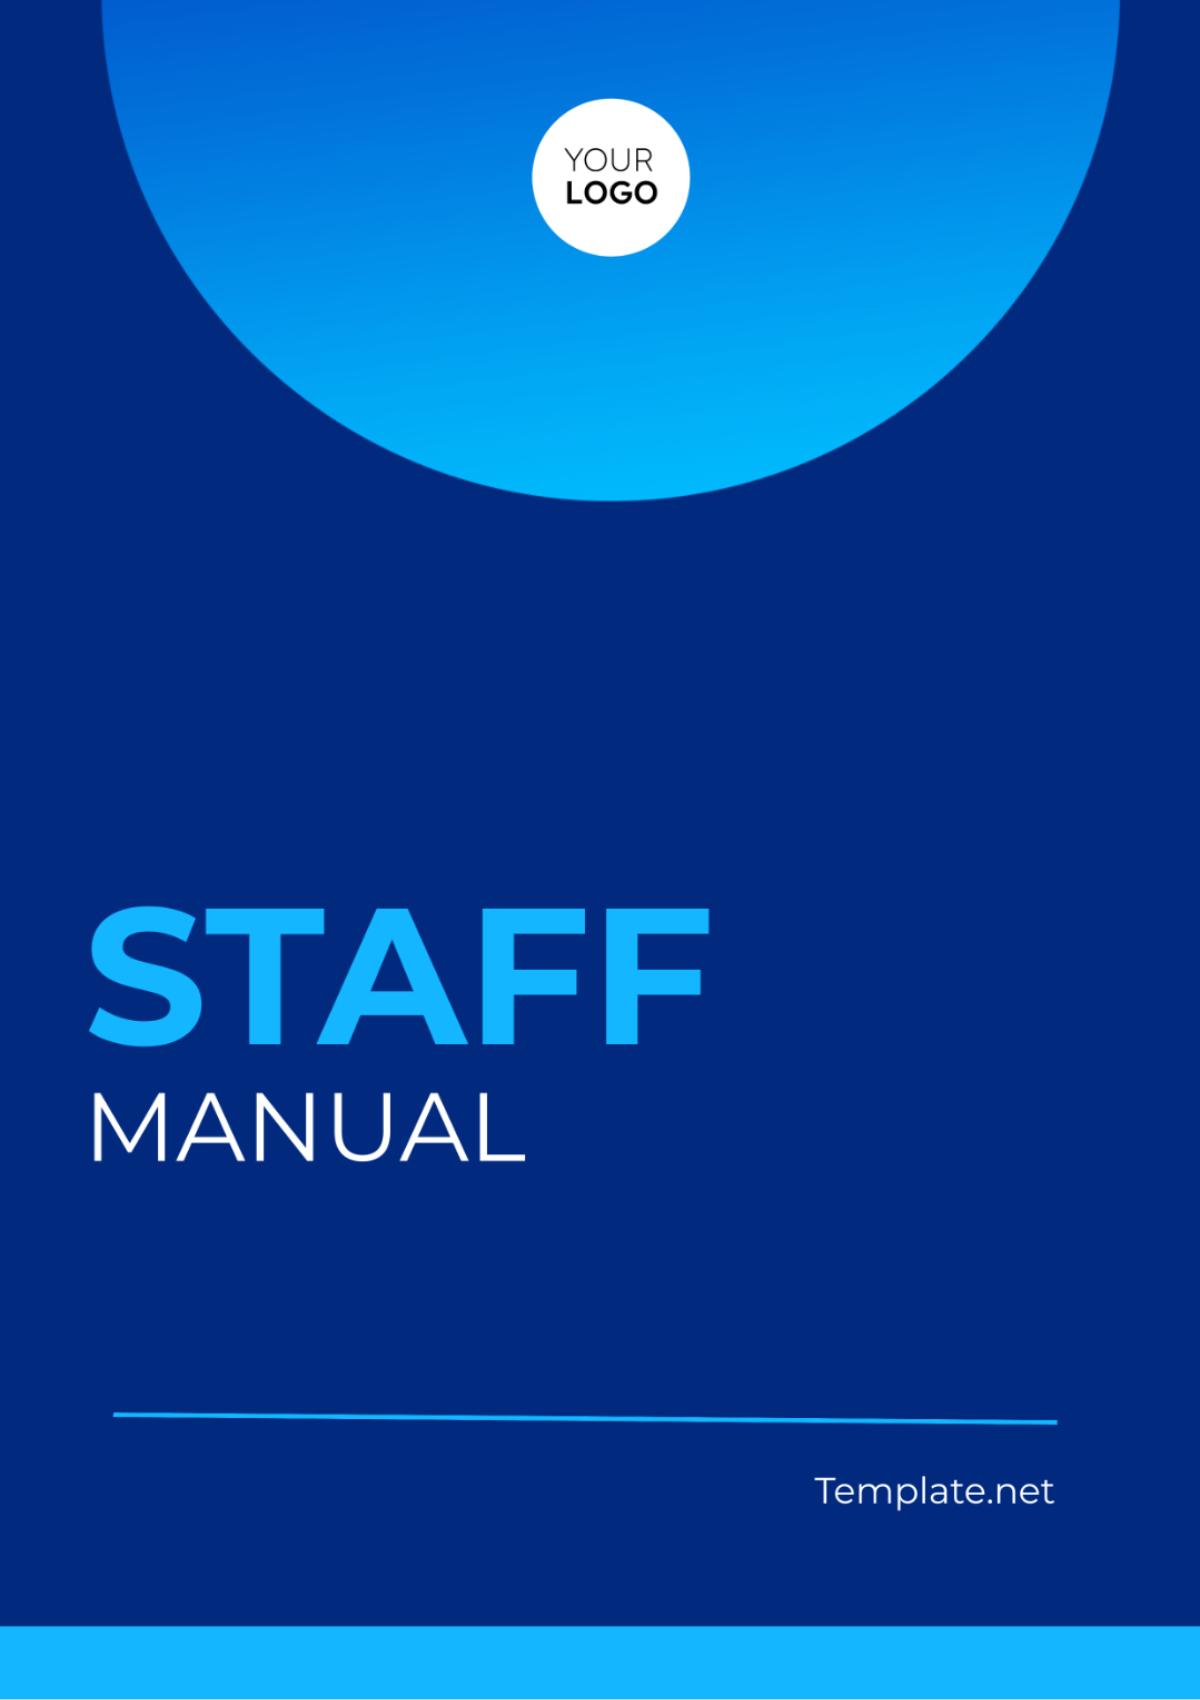 Free Staff Manual Template